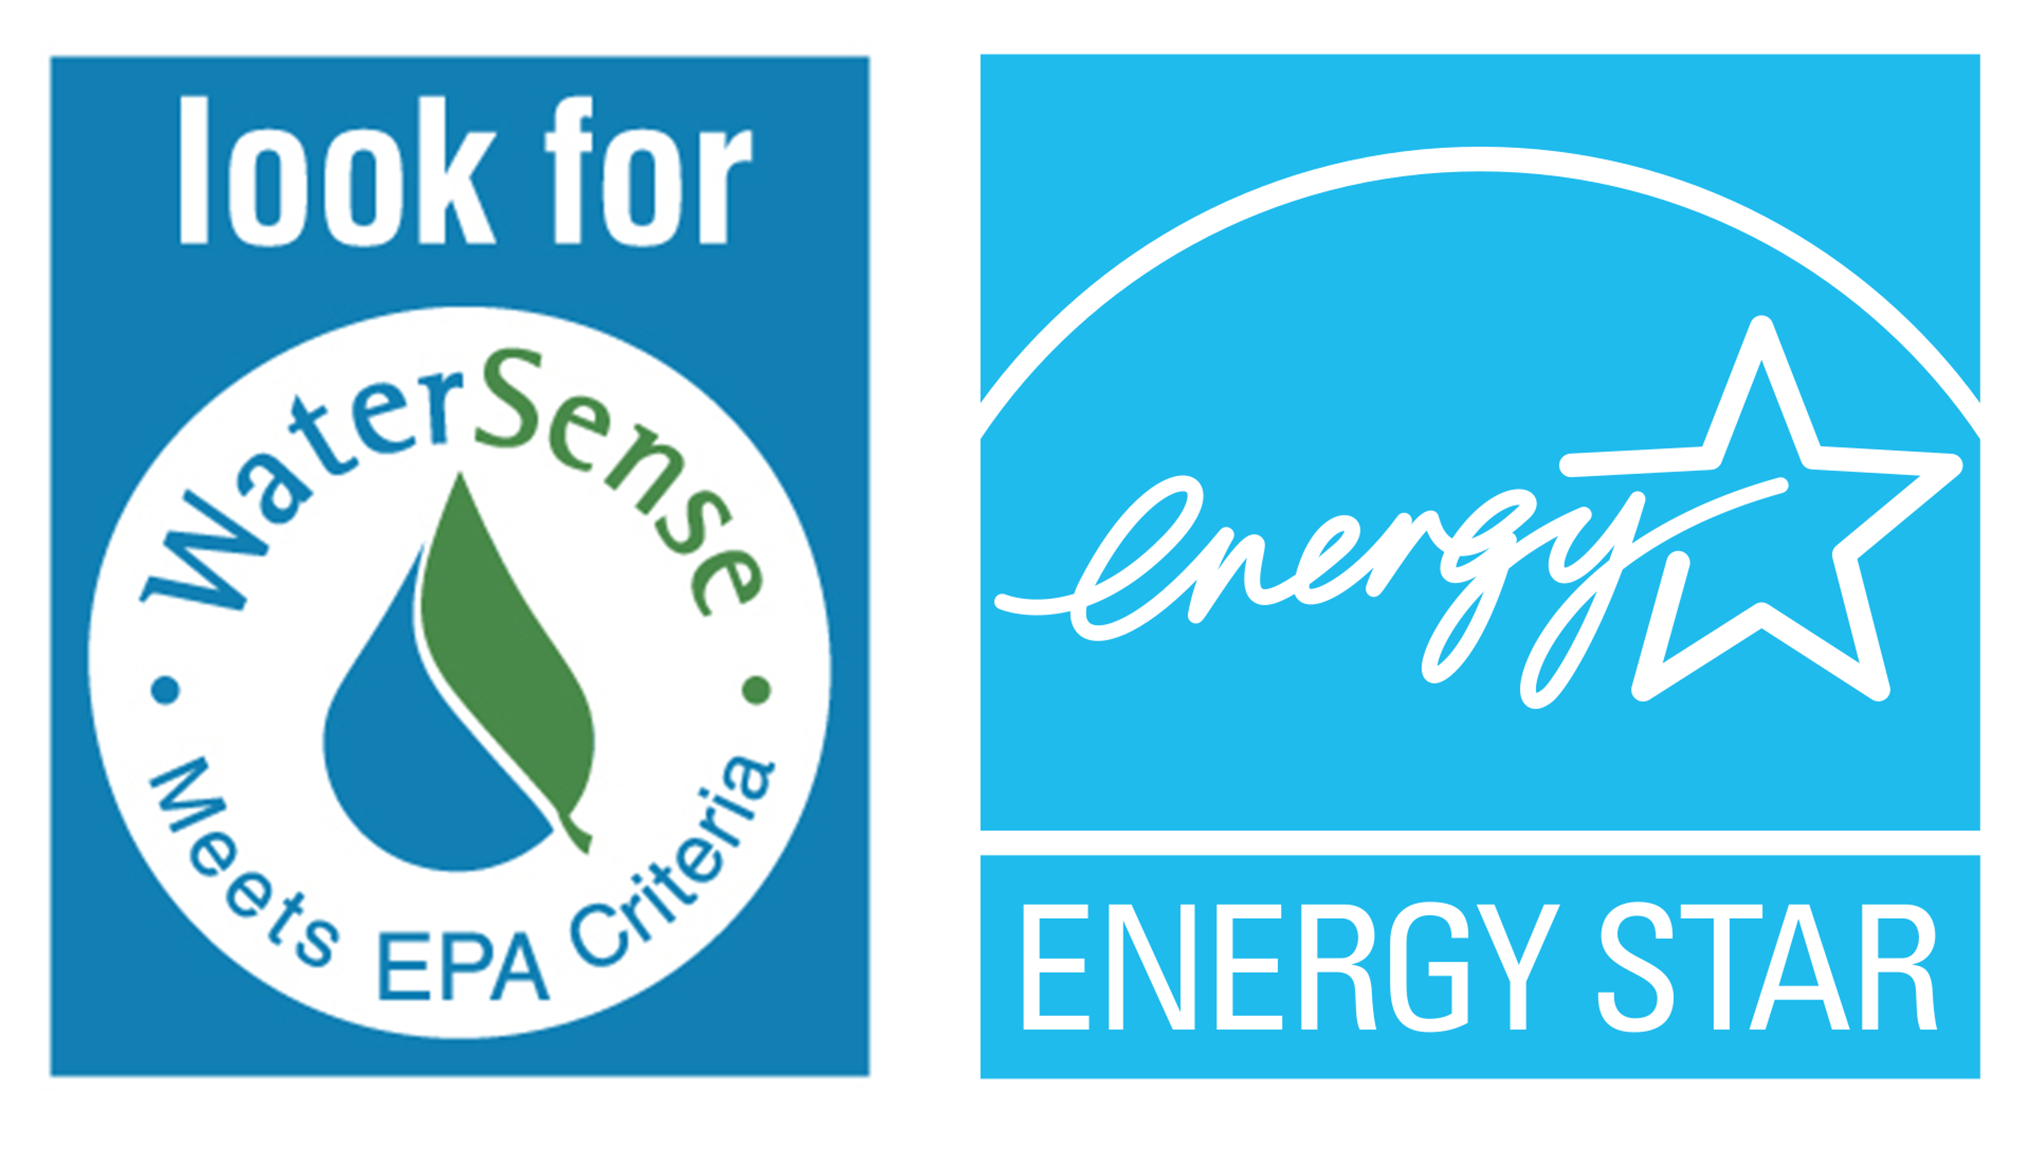 WaterSense and Energy Star logos